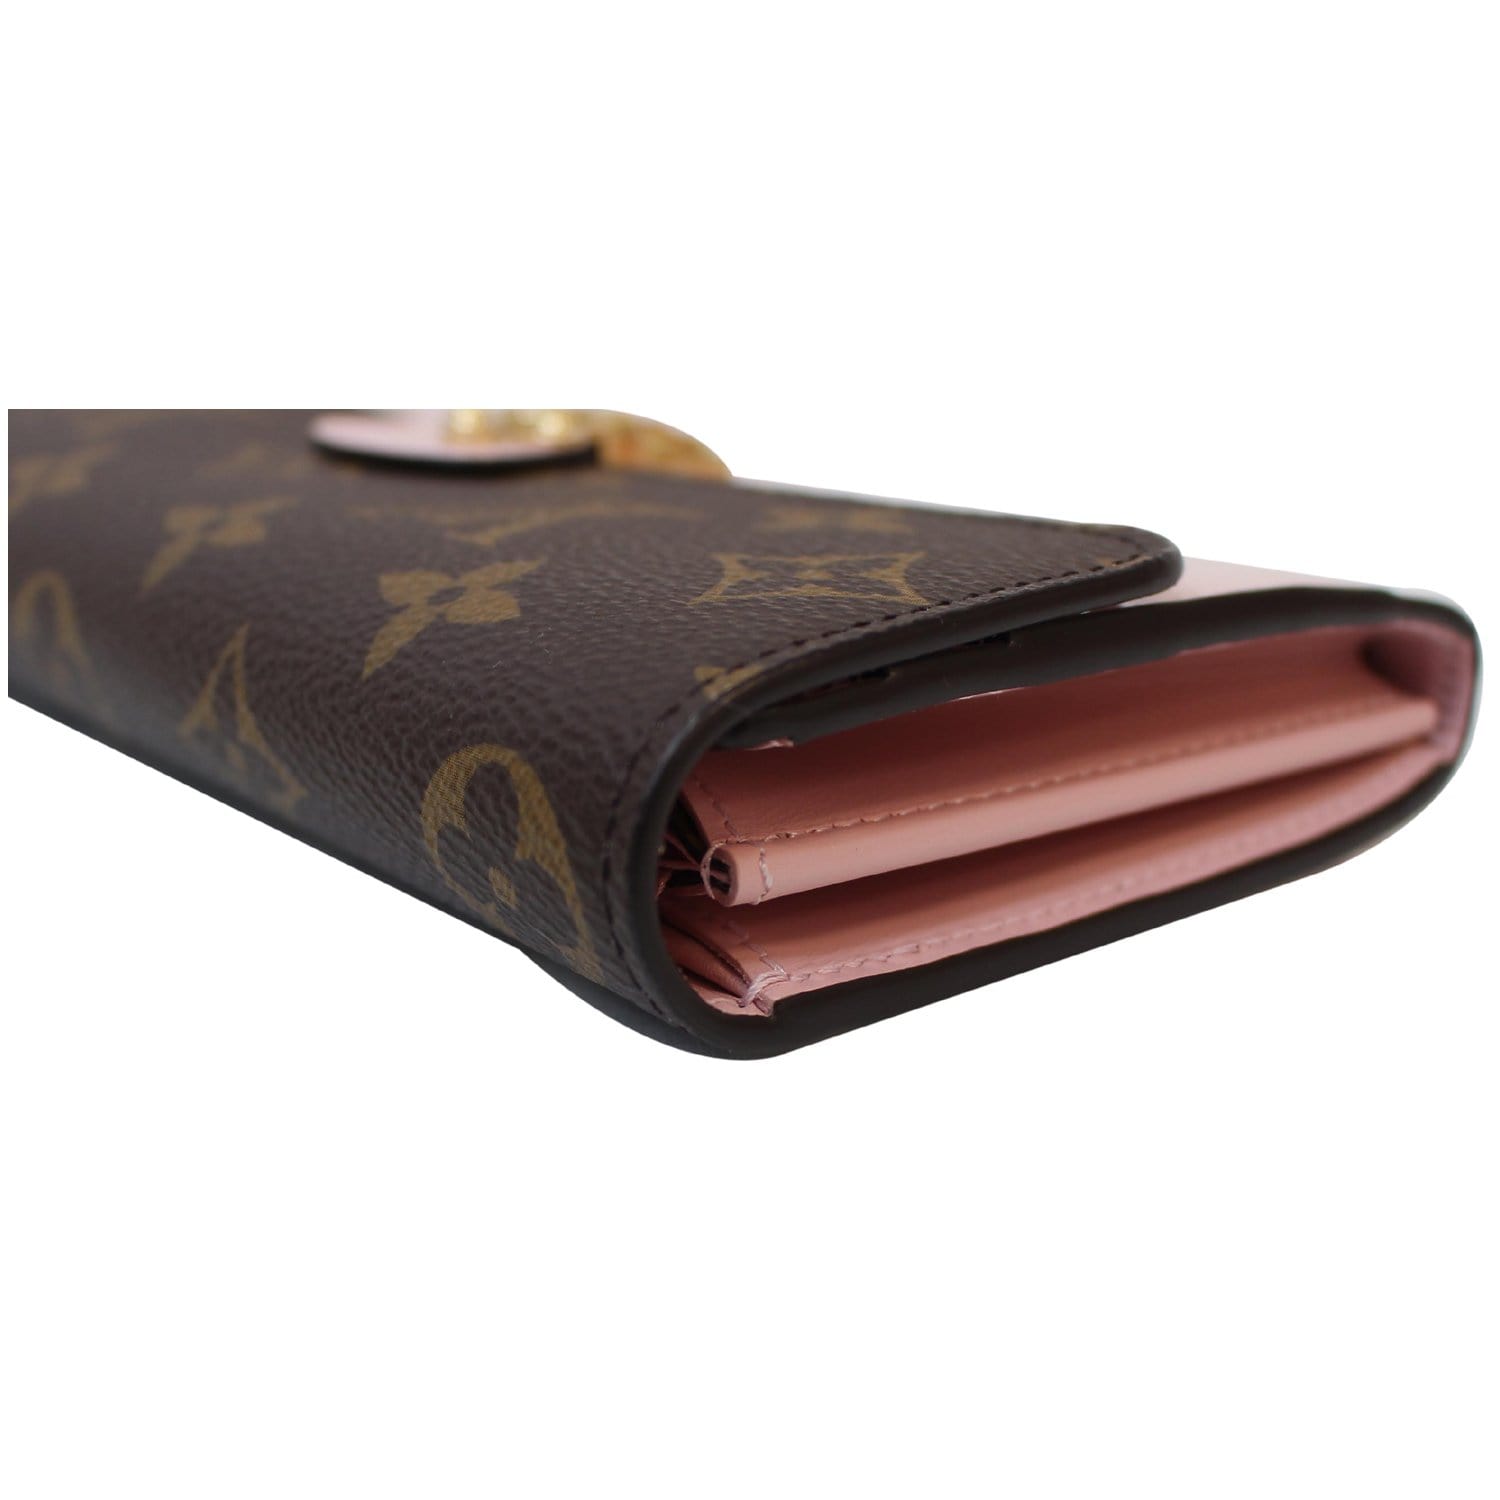 Louis Vuitton Cherrywood Monogram Leather Wallet